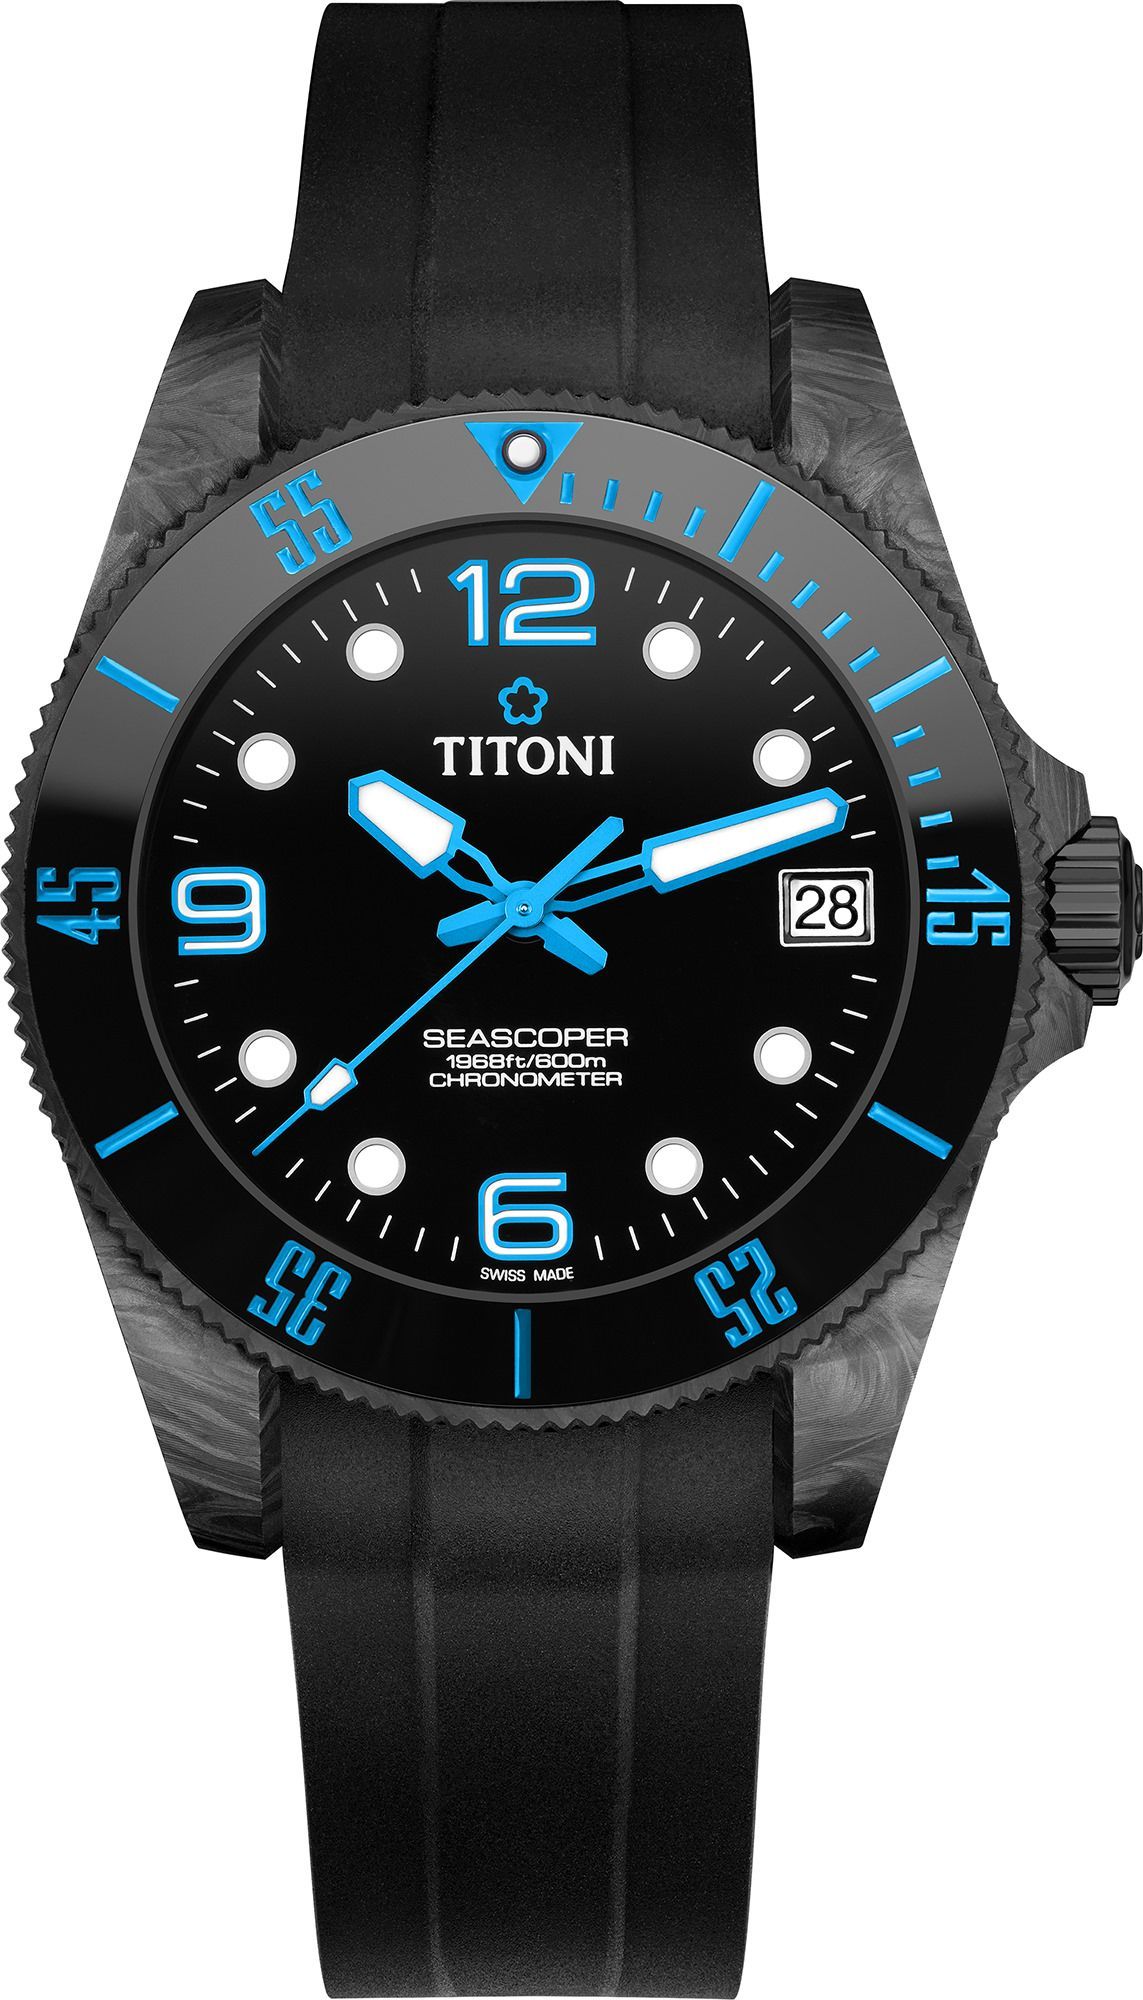 Titoni Seascoper Seascoper 600 Black Dial 42 mm Automatic Watch For Men - 1